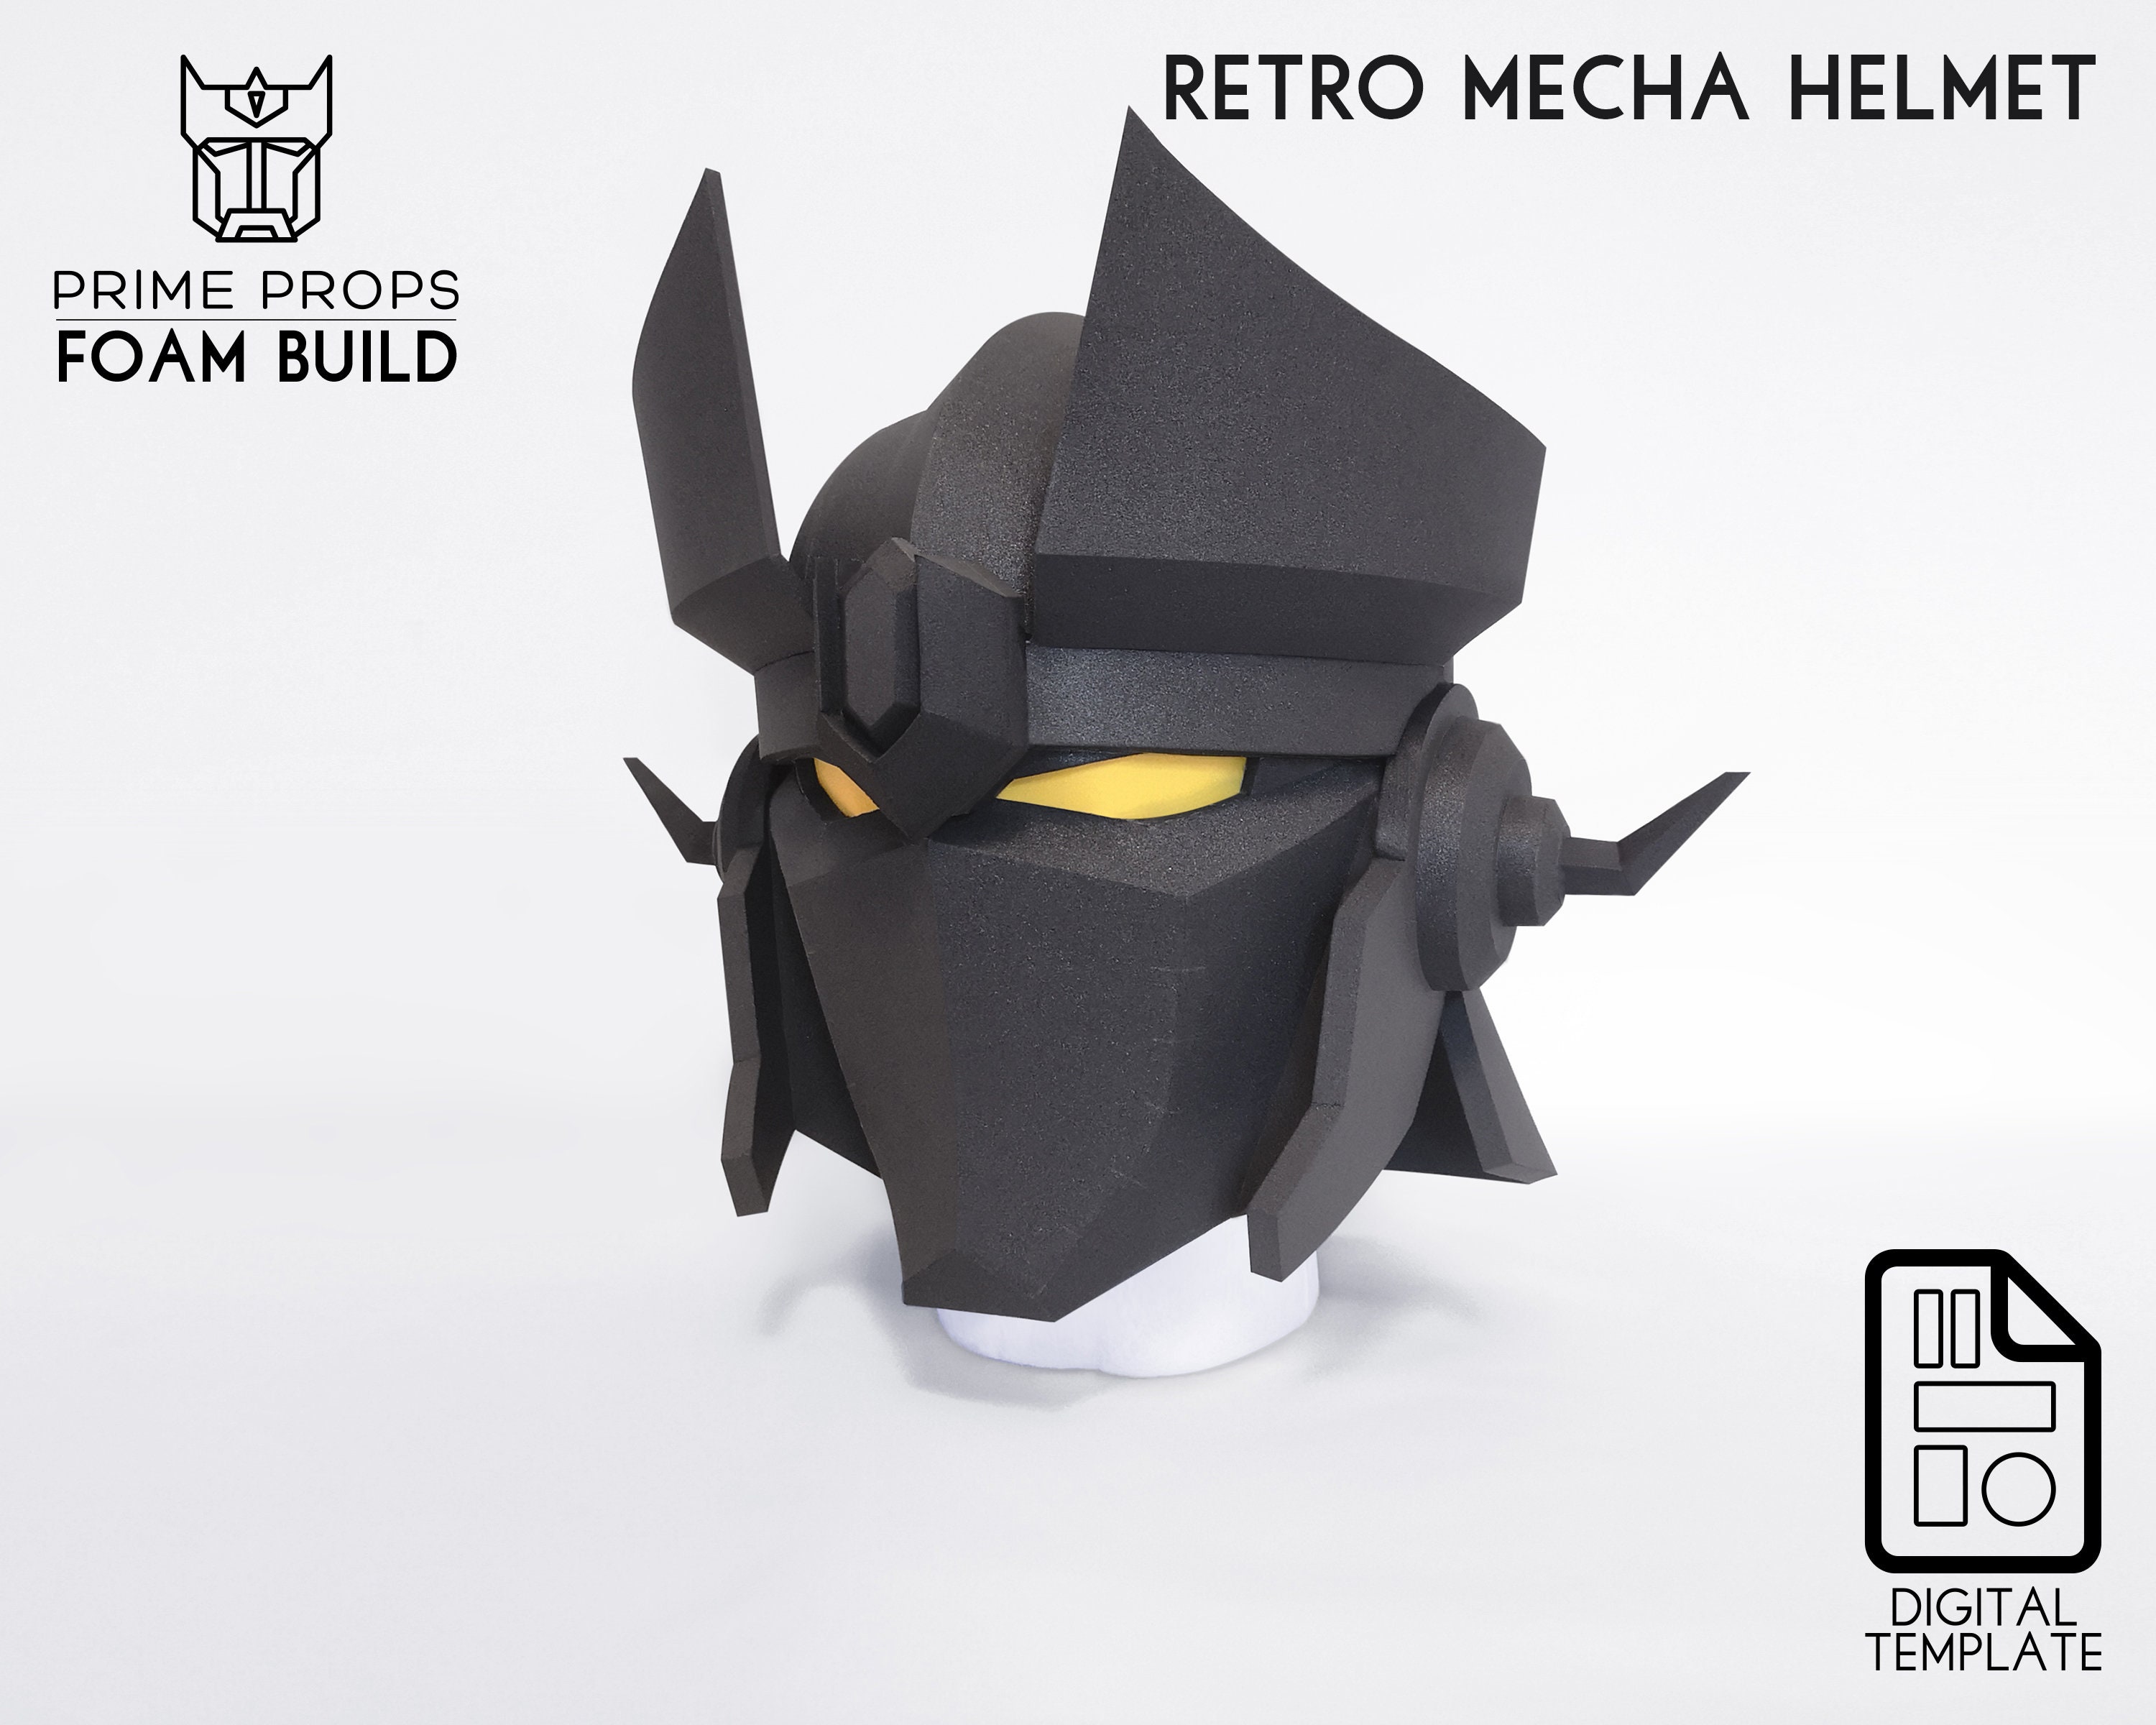 Custom Mecha Sonic figure (S3K version) by Geoffreysambursky1 on